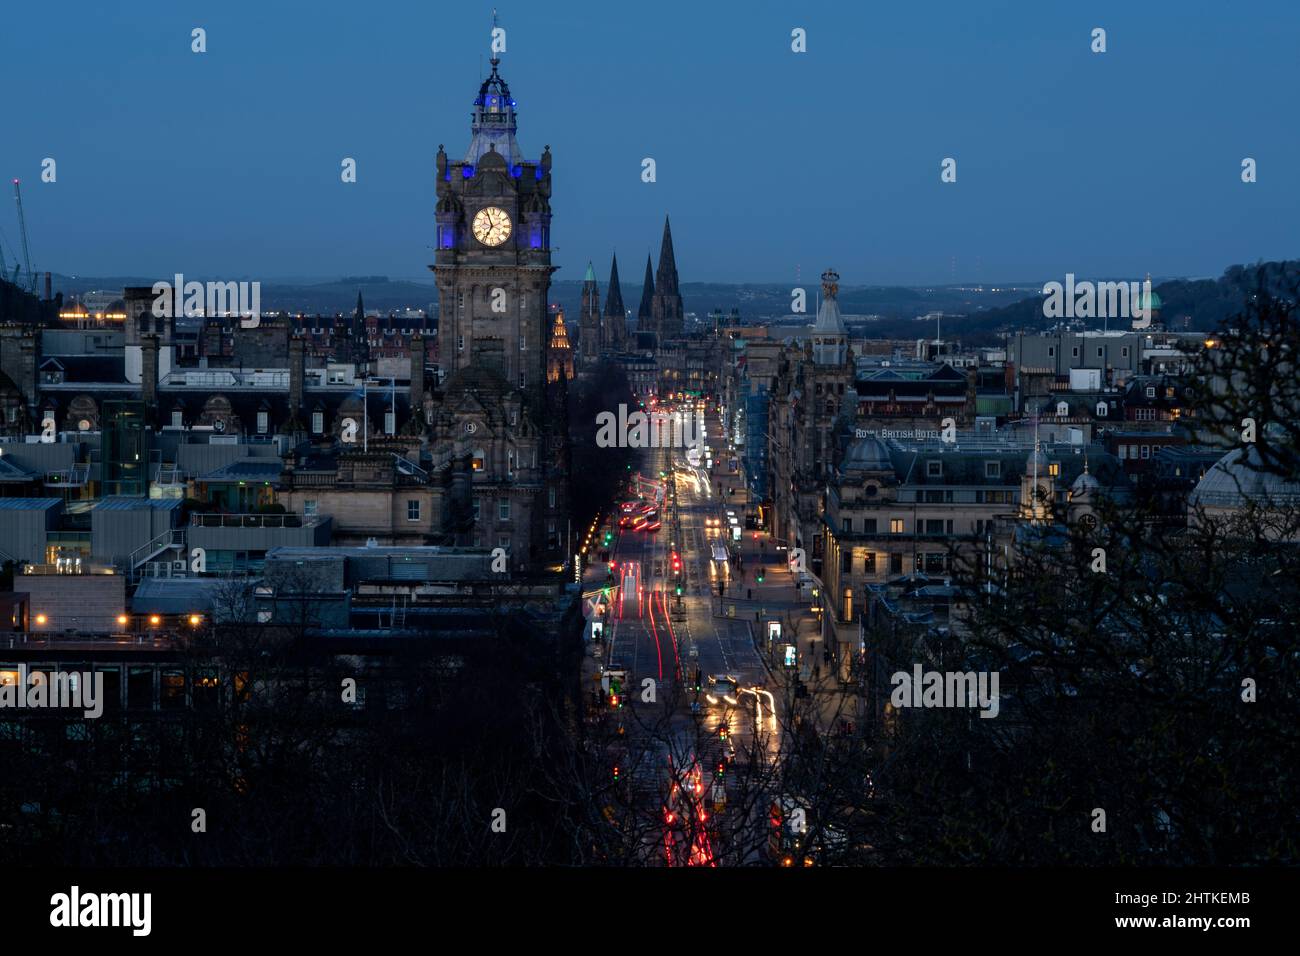 The view down Princes street with the Balmoral Hotel clock tower, Edinburgh, Scotland Stock Photo